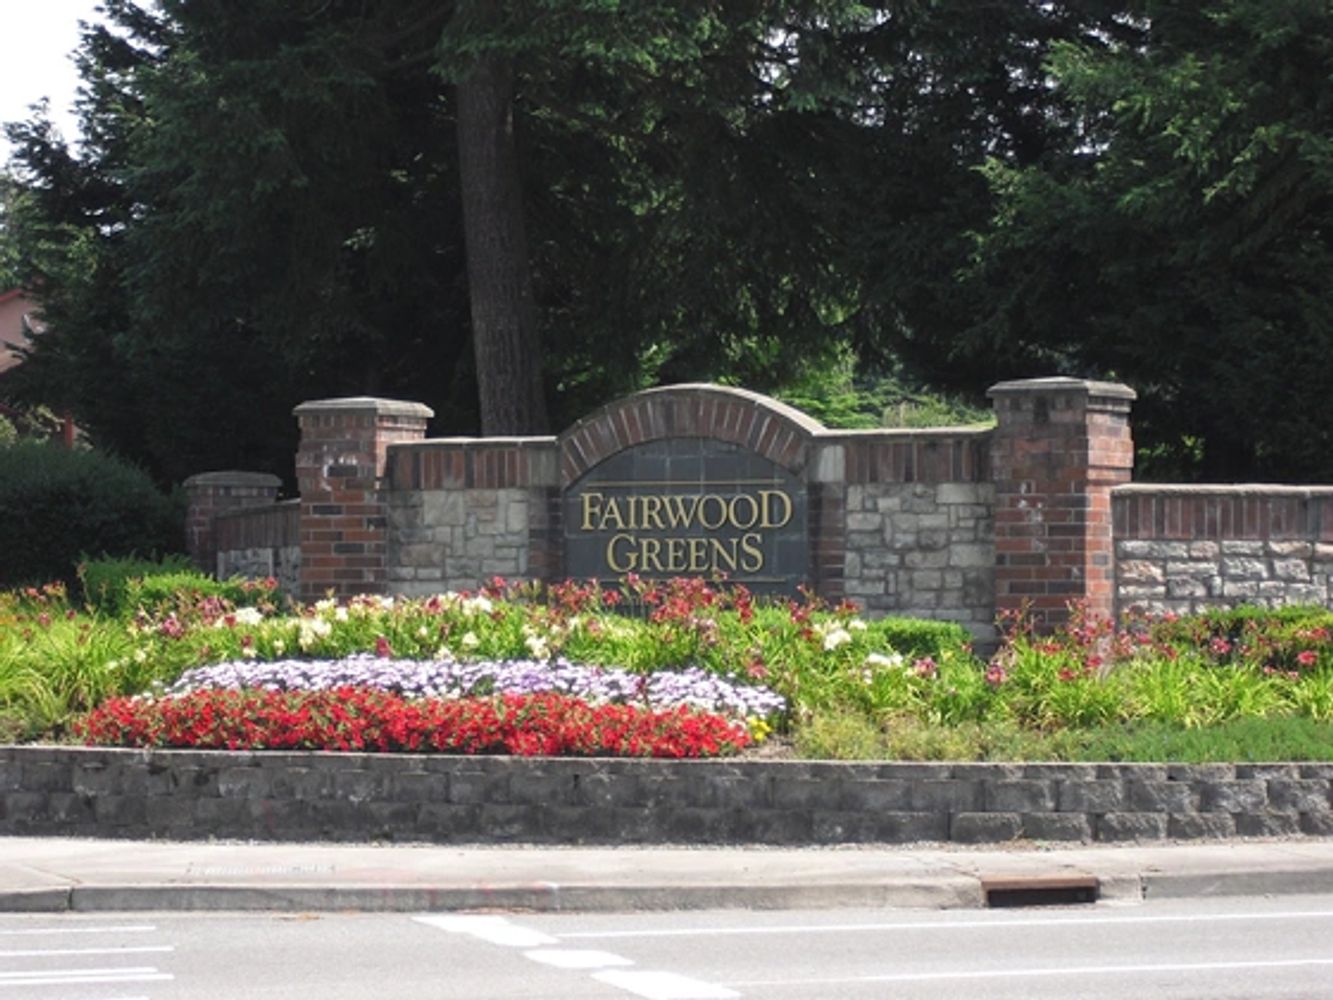 Landscaped floral entrance & sign to Fairwood Greens Neighborhood in Renton, Washington